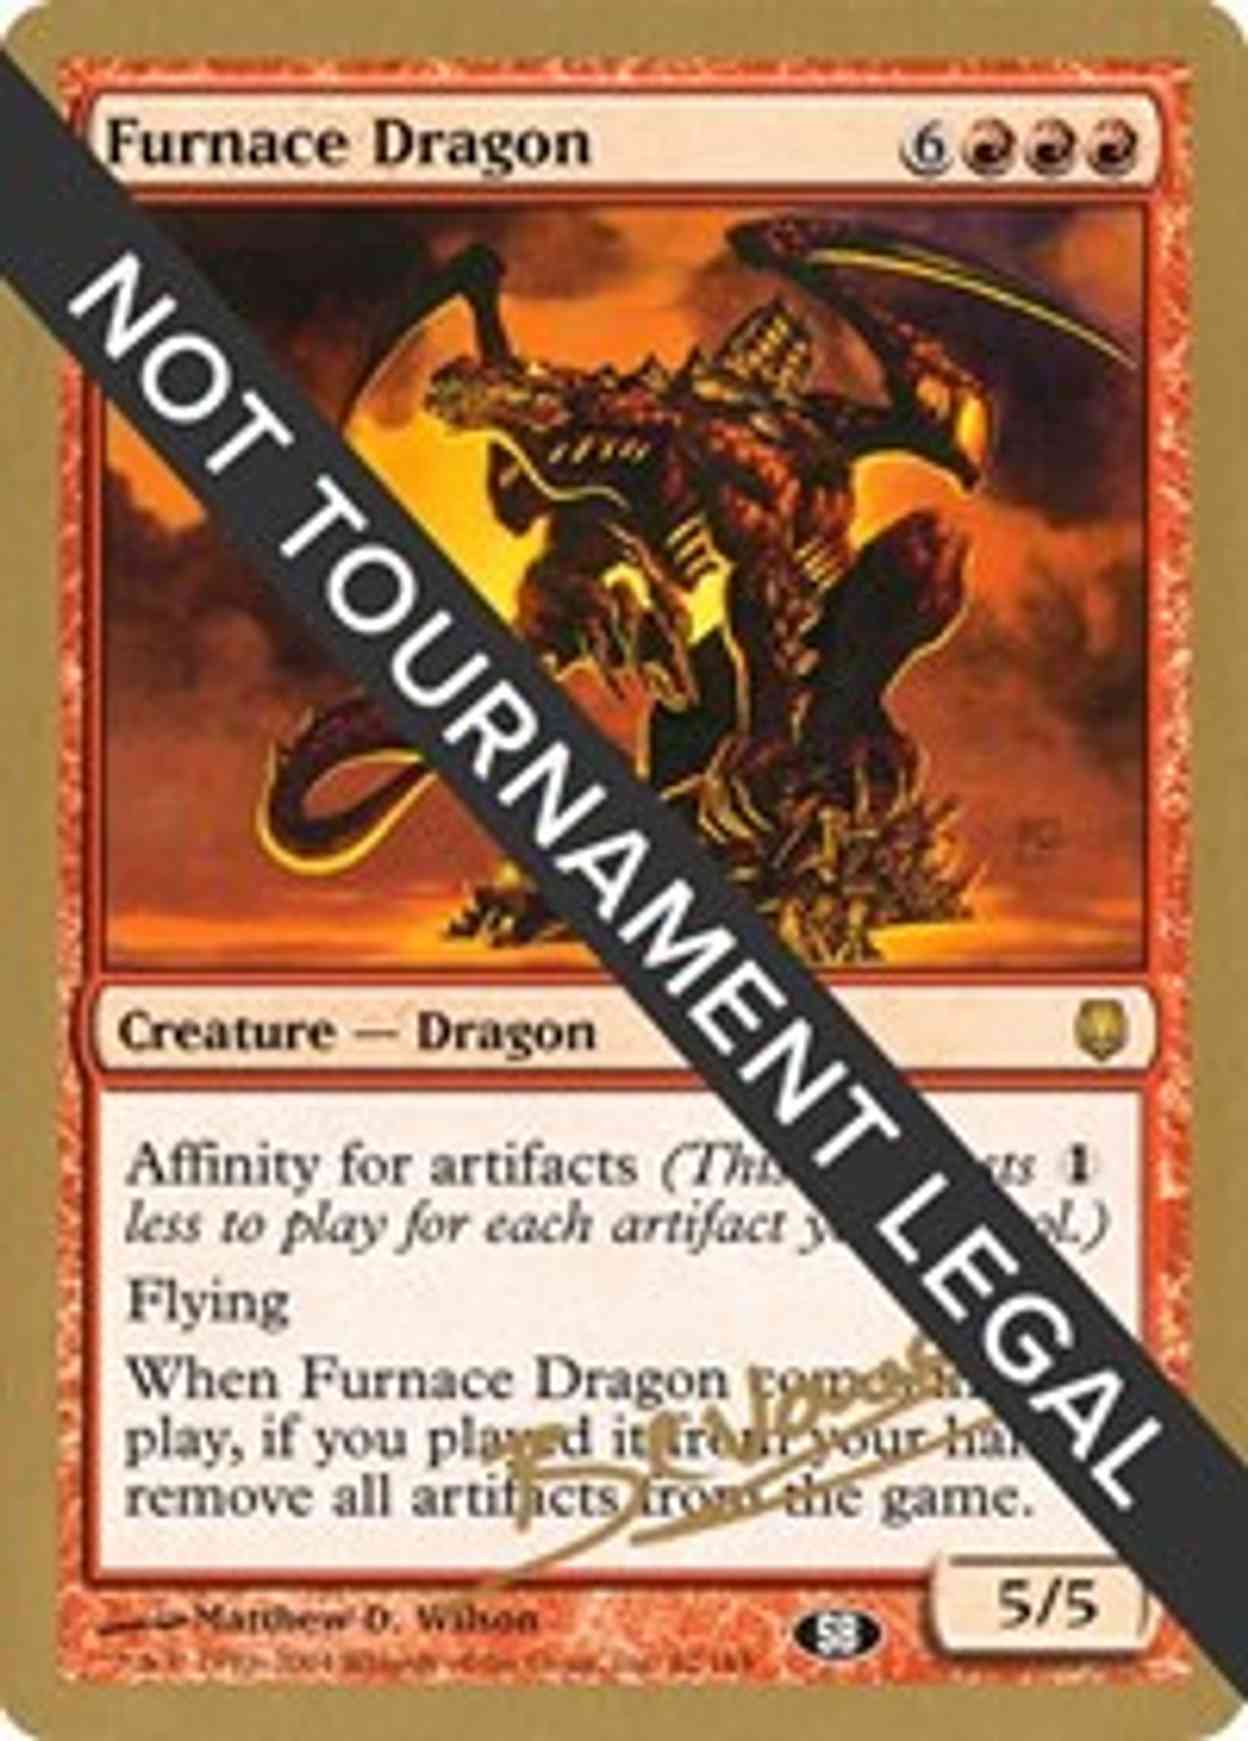 Furnace Dragon - 2004 Manuel Bevand (DST) (SB) magic card front